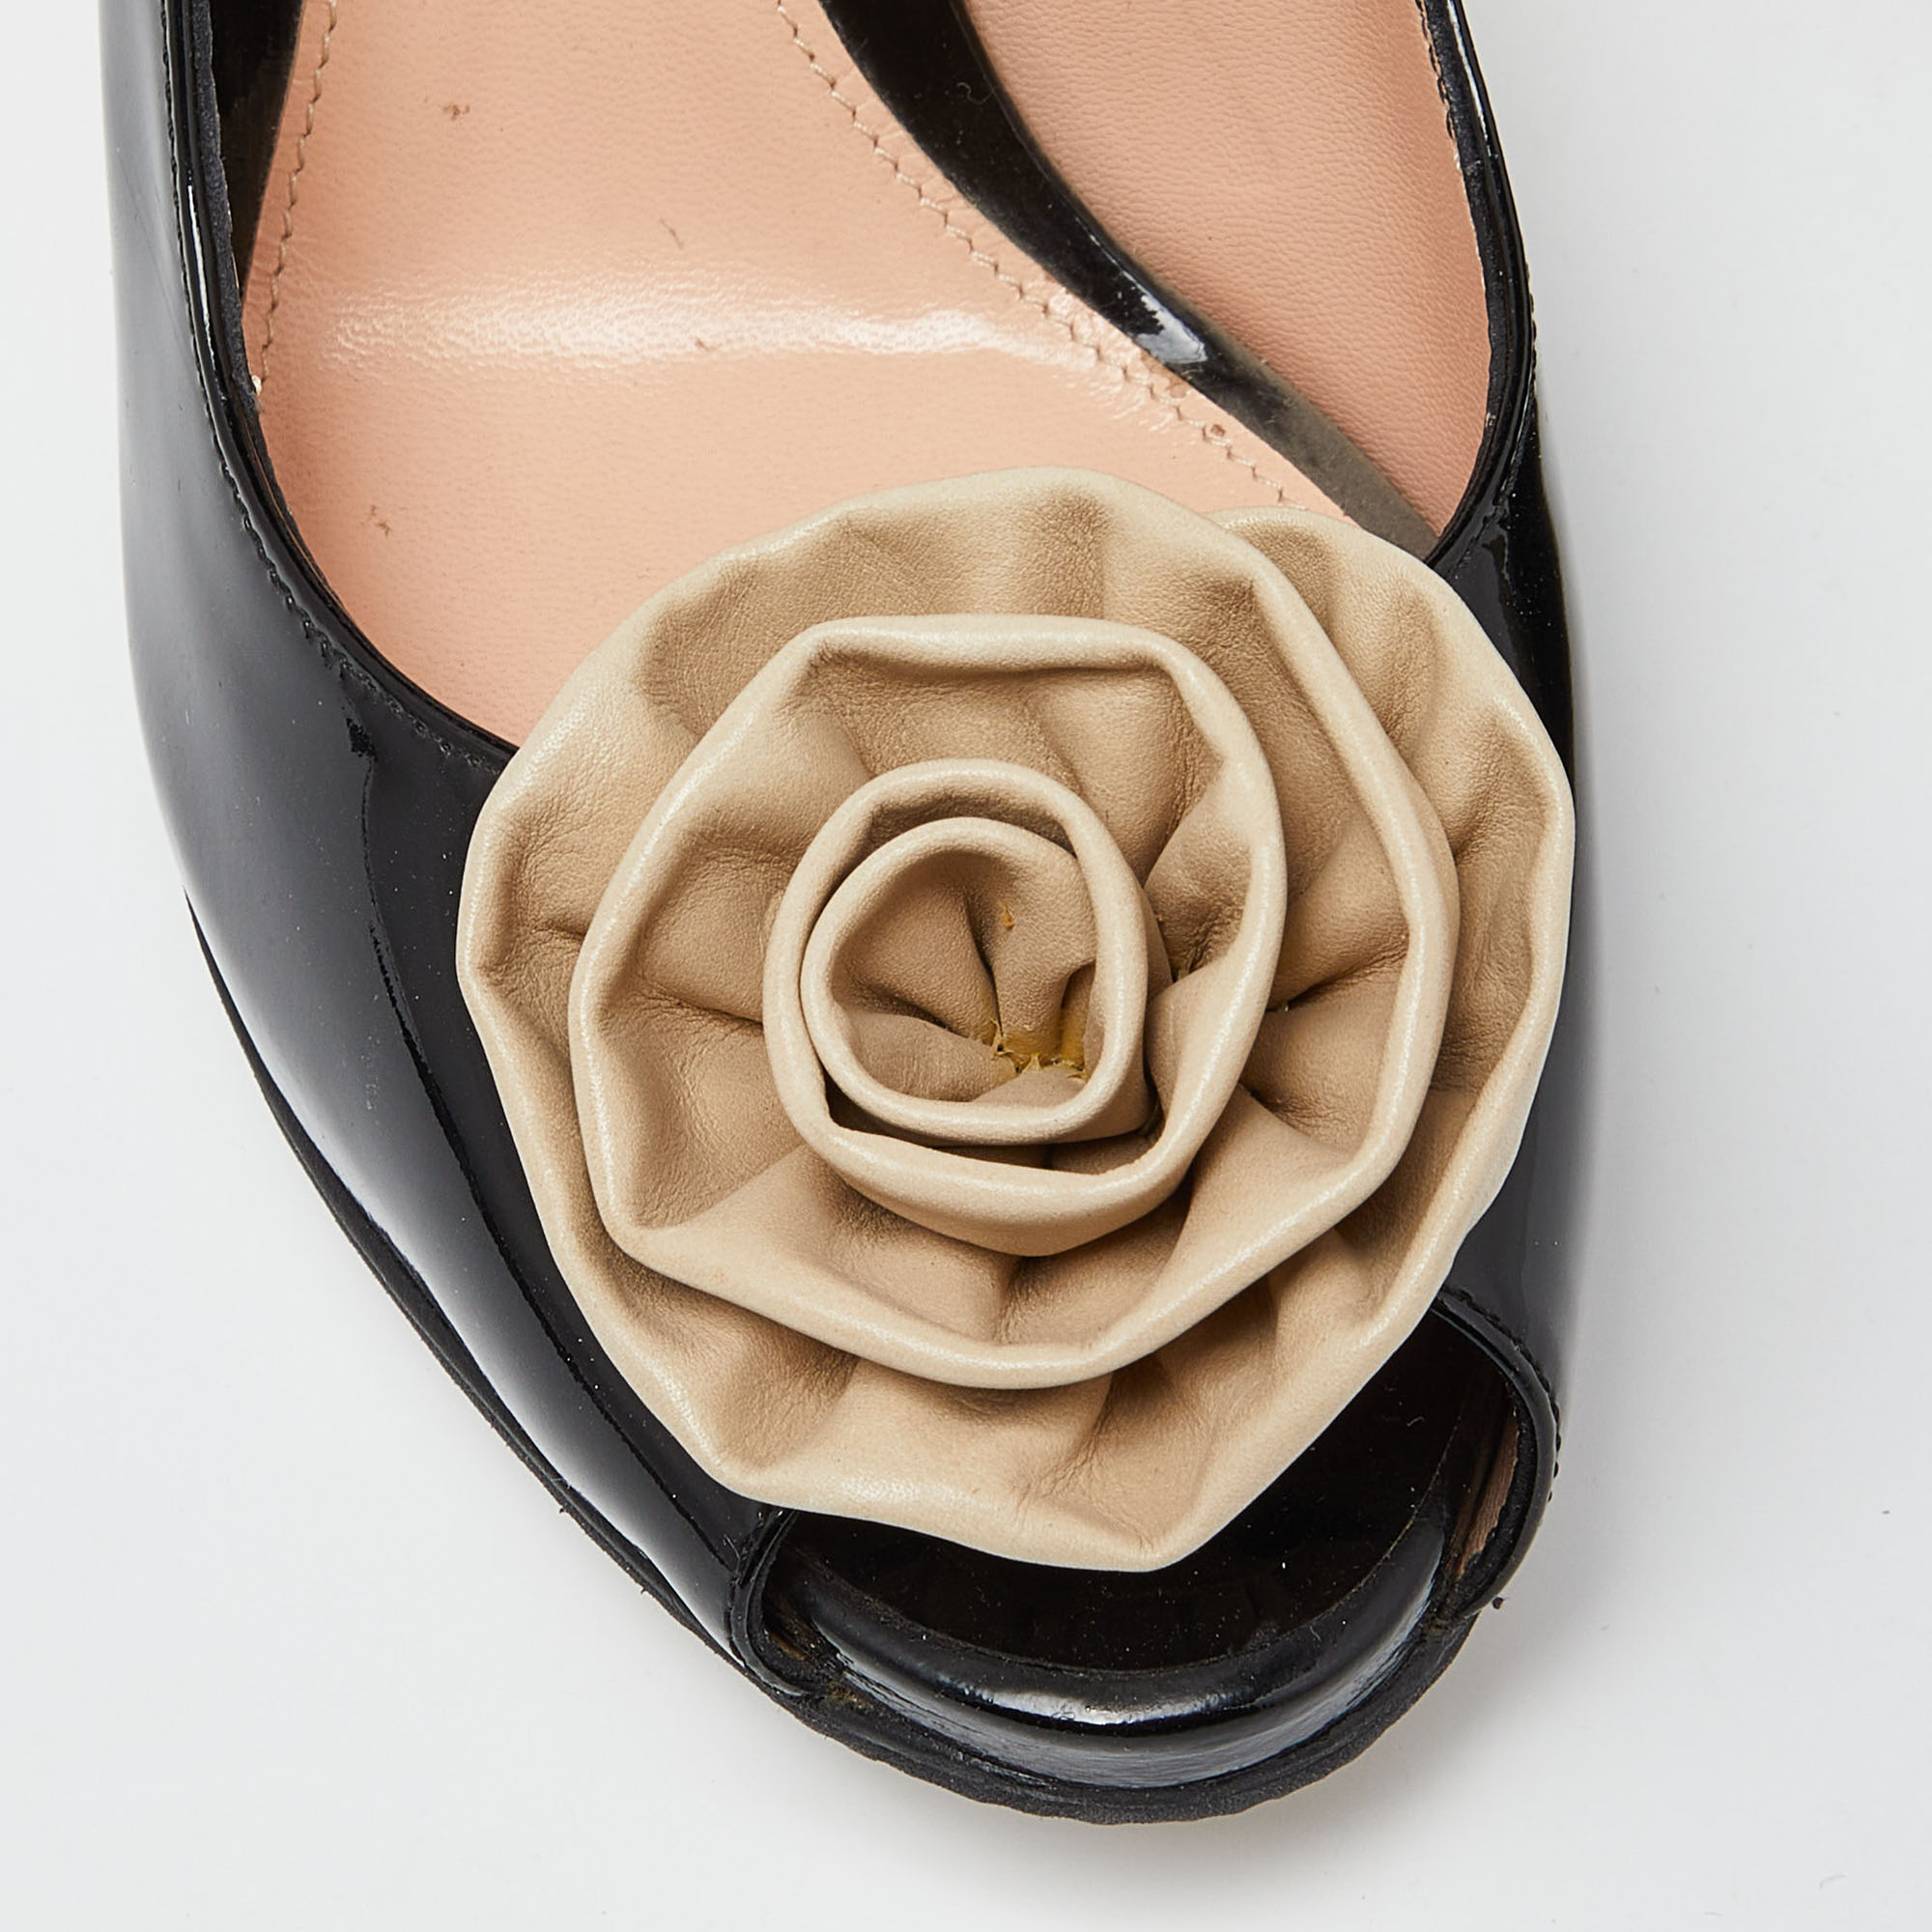 Gianvito Rossi Black Patent Leather Flower Applique Peep Toe Slingback Pumps Size 38